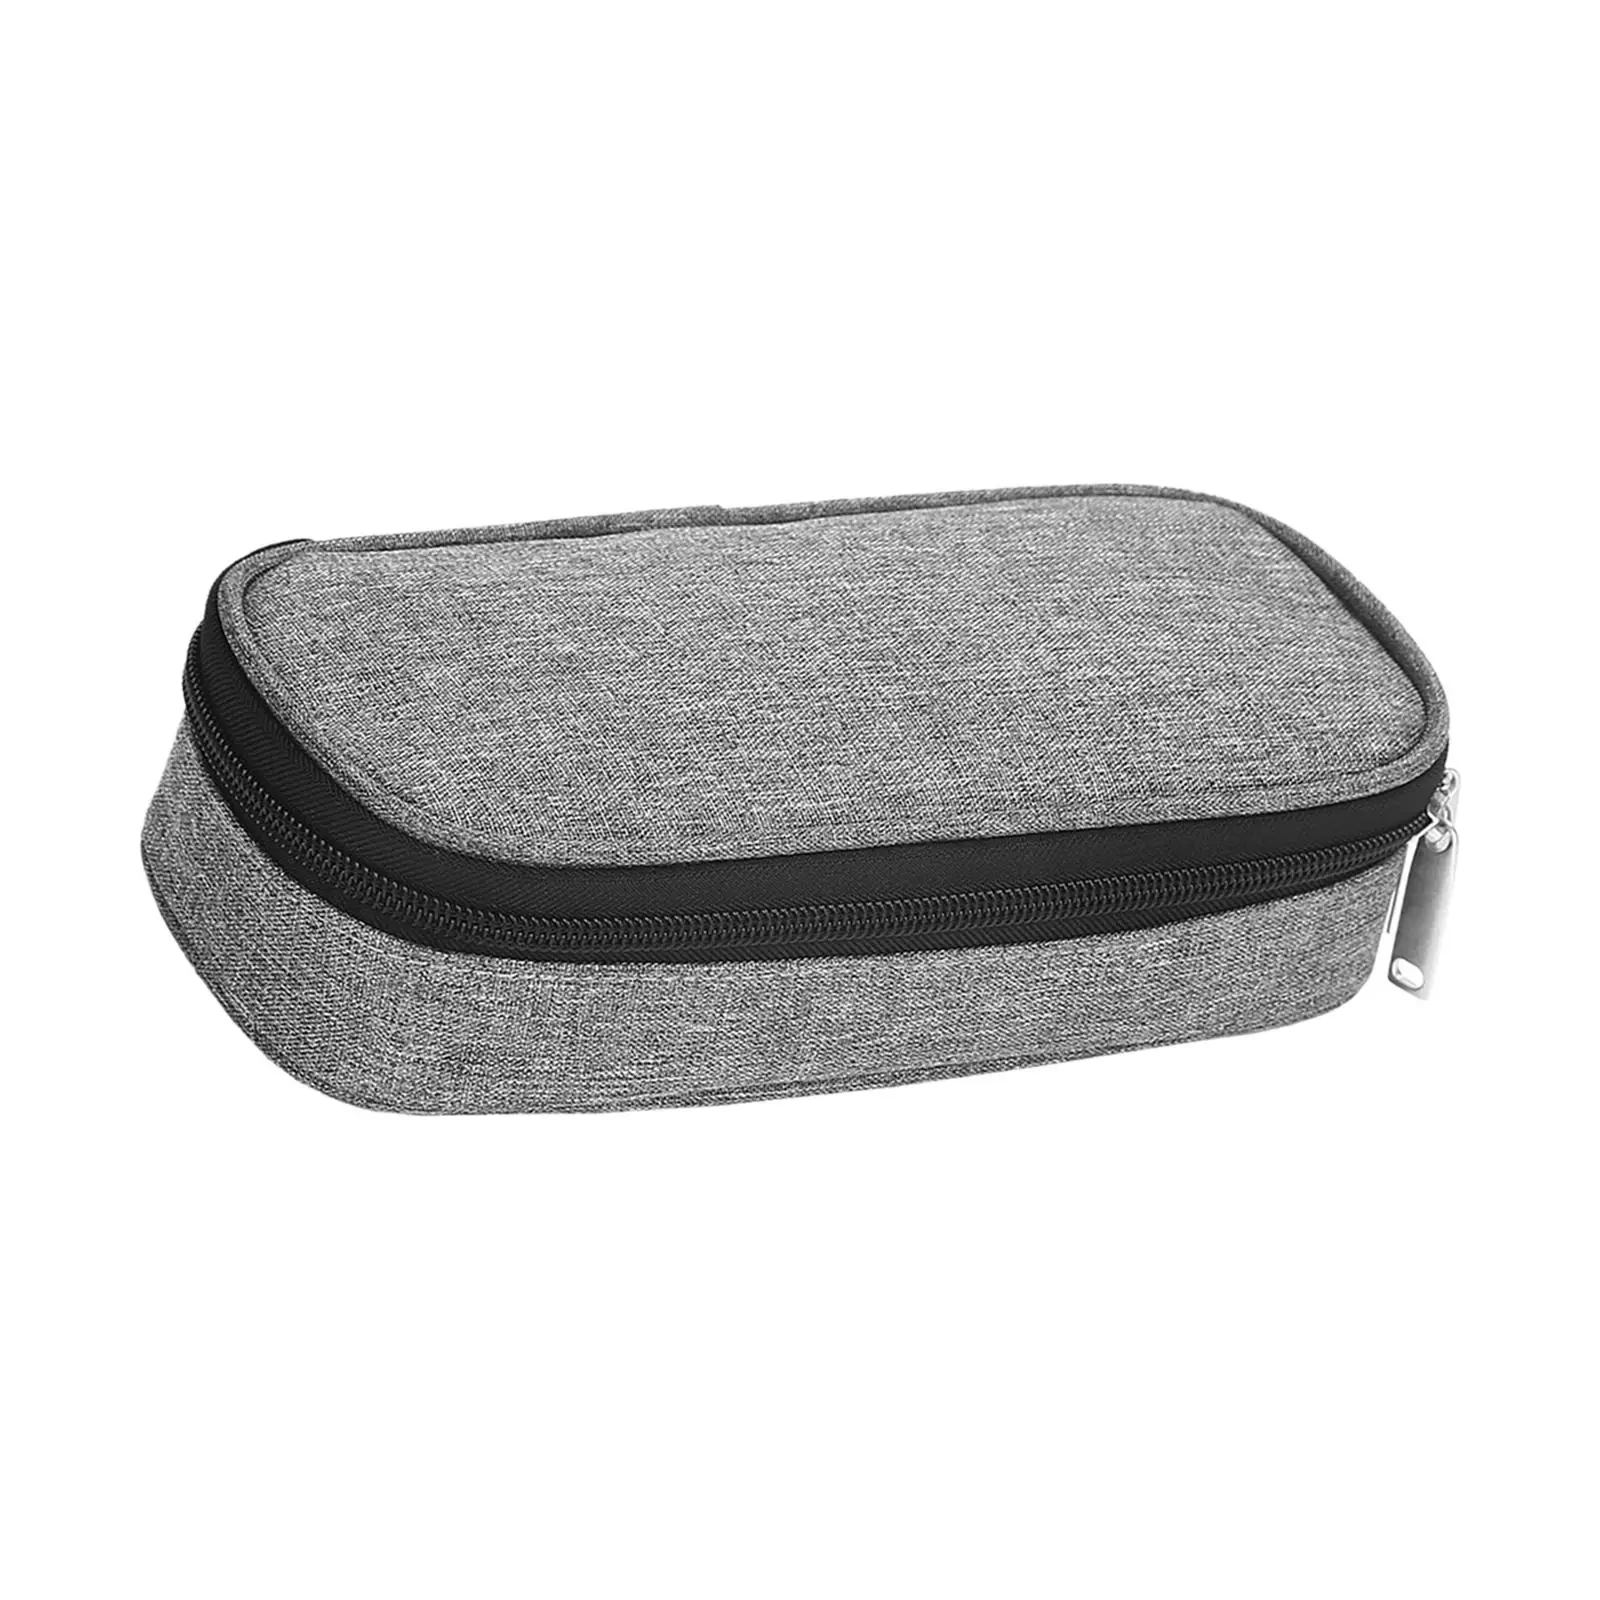 Medical Cooler Bag Portable Keep Cool Supplies Travel Bag Convenient Protective Outdoor Cooler Pocket Organizer Carrying Bag